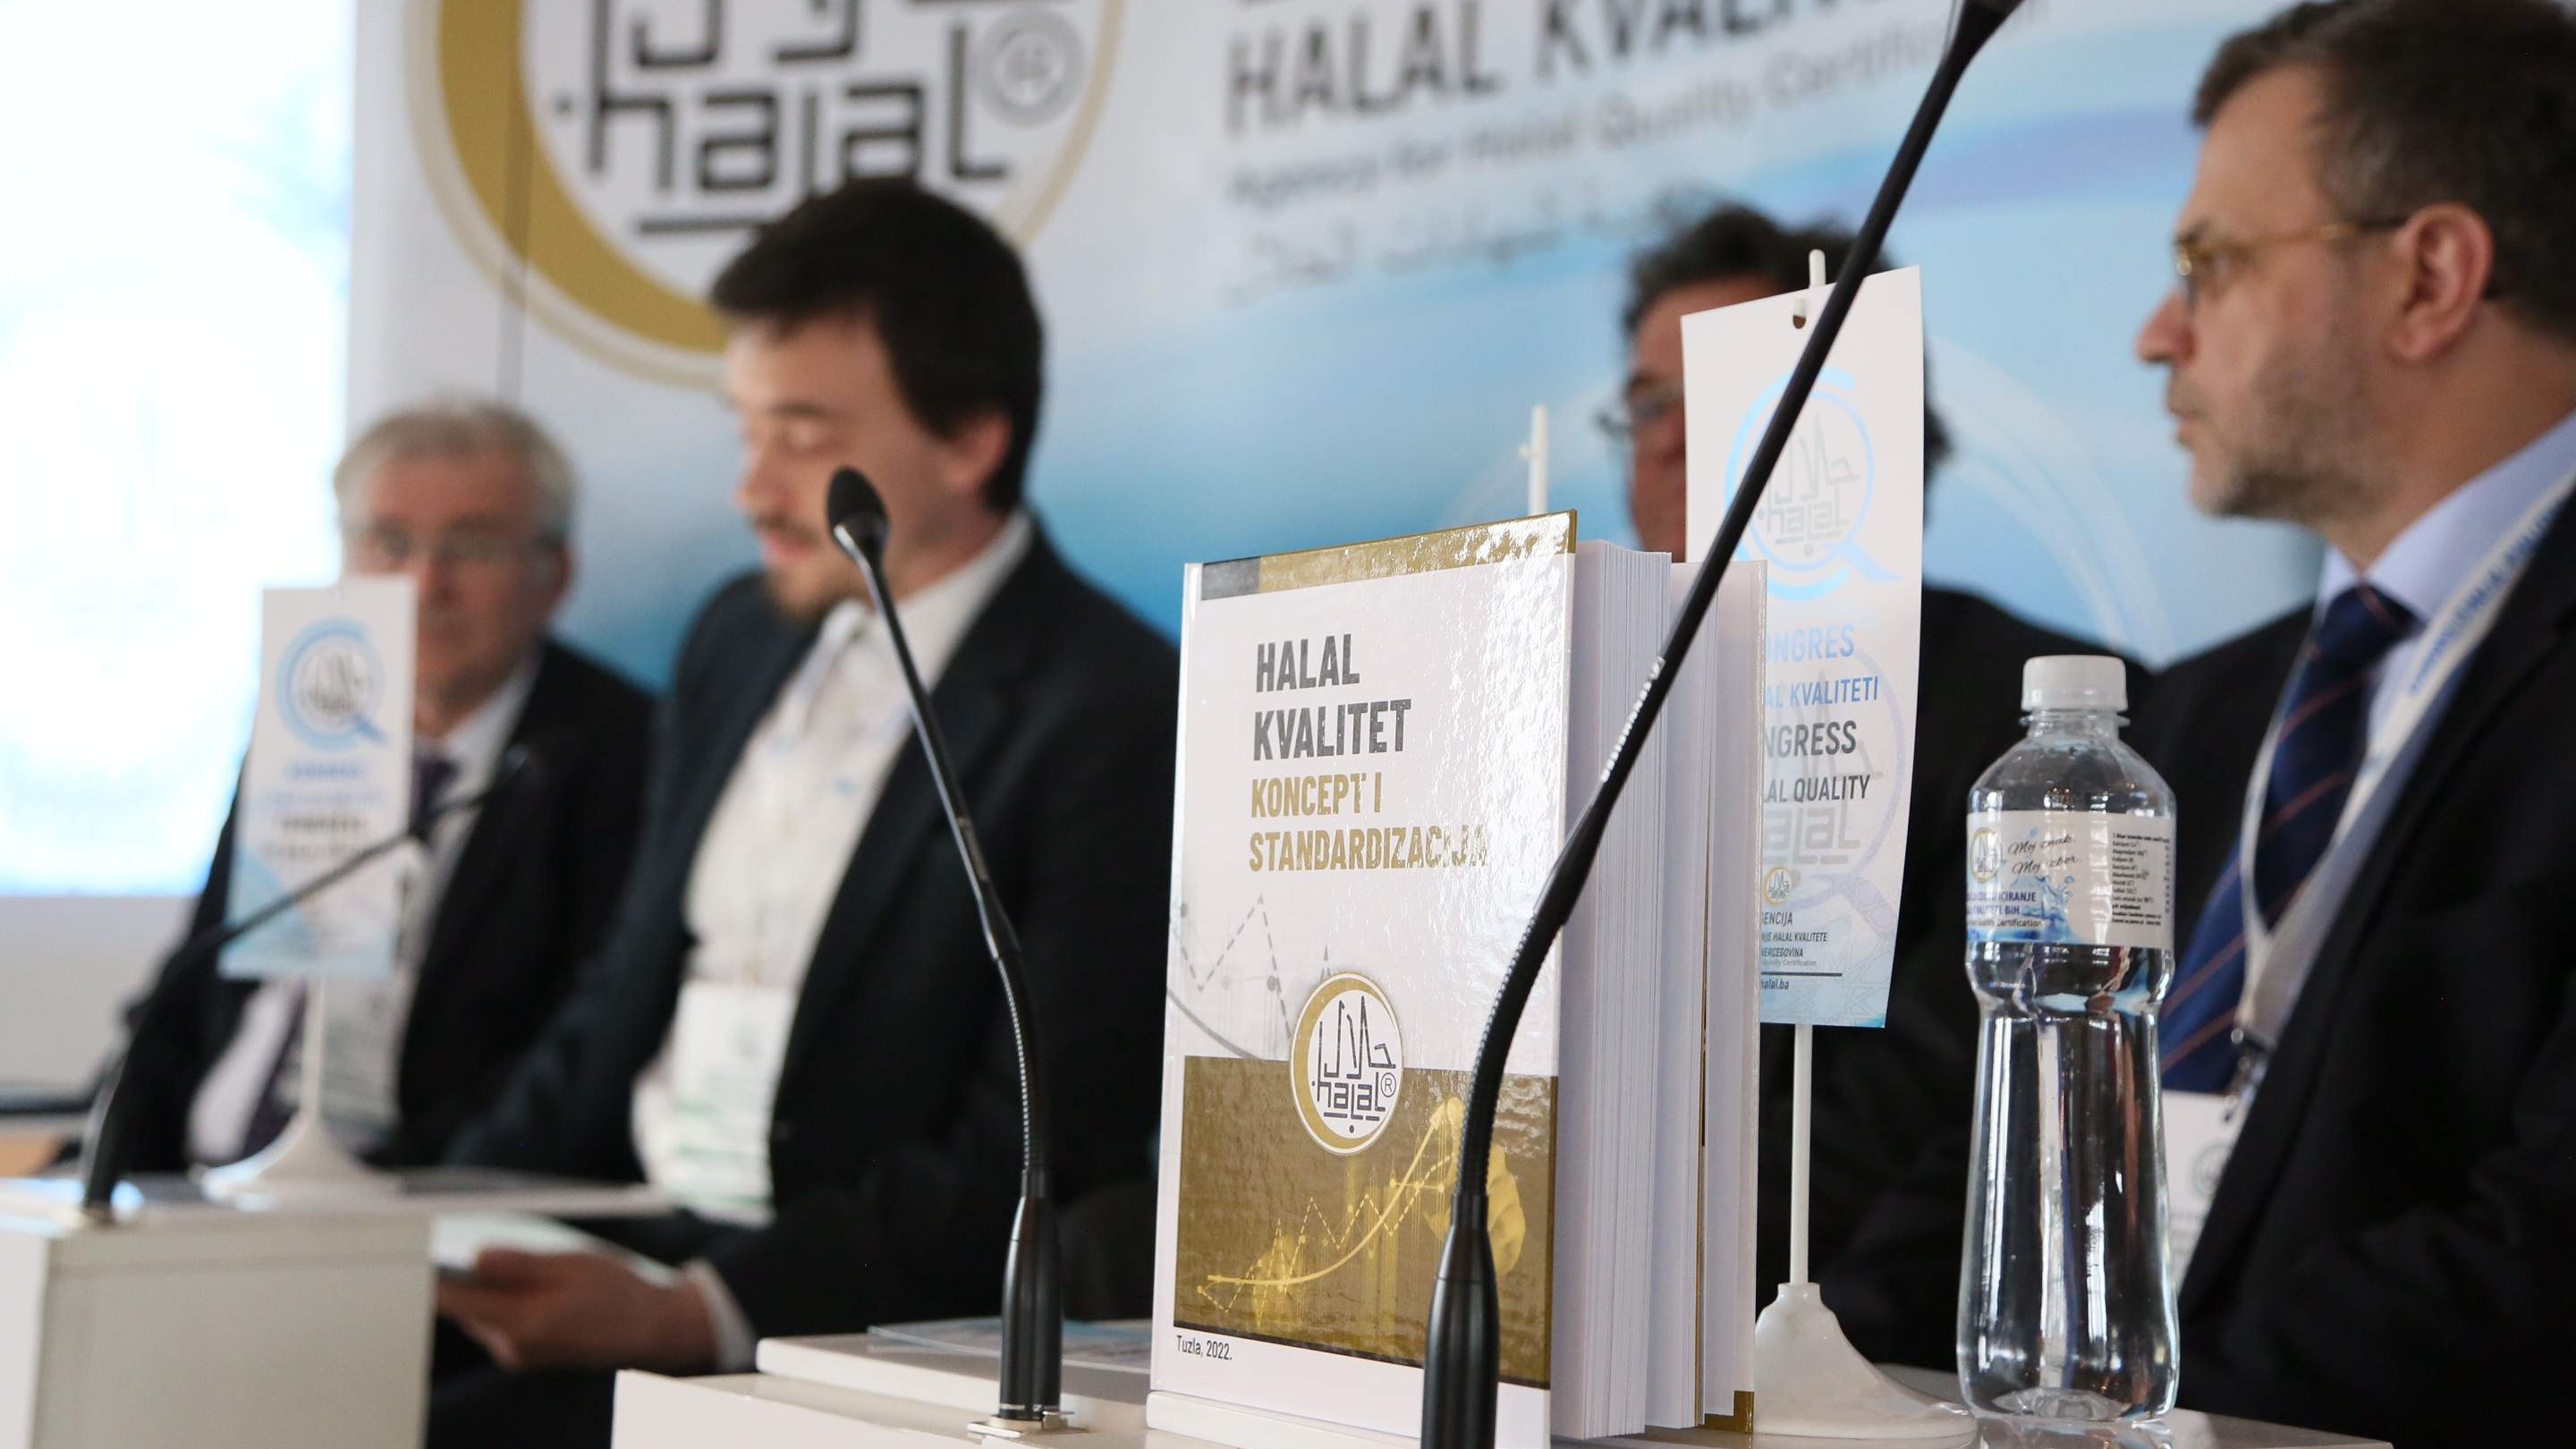 SHF - Promocija knjige "Halal kvalitet, koncept i standardizacija"